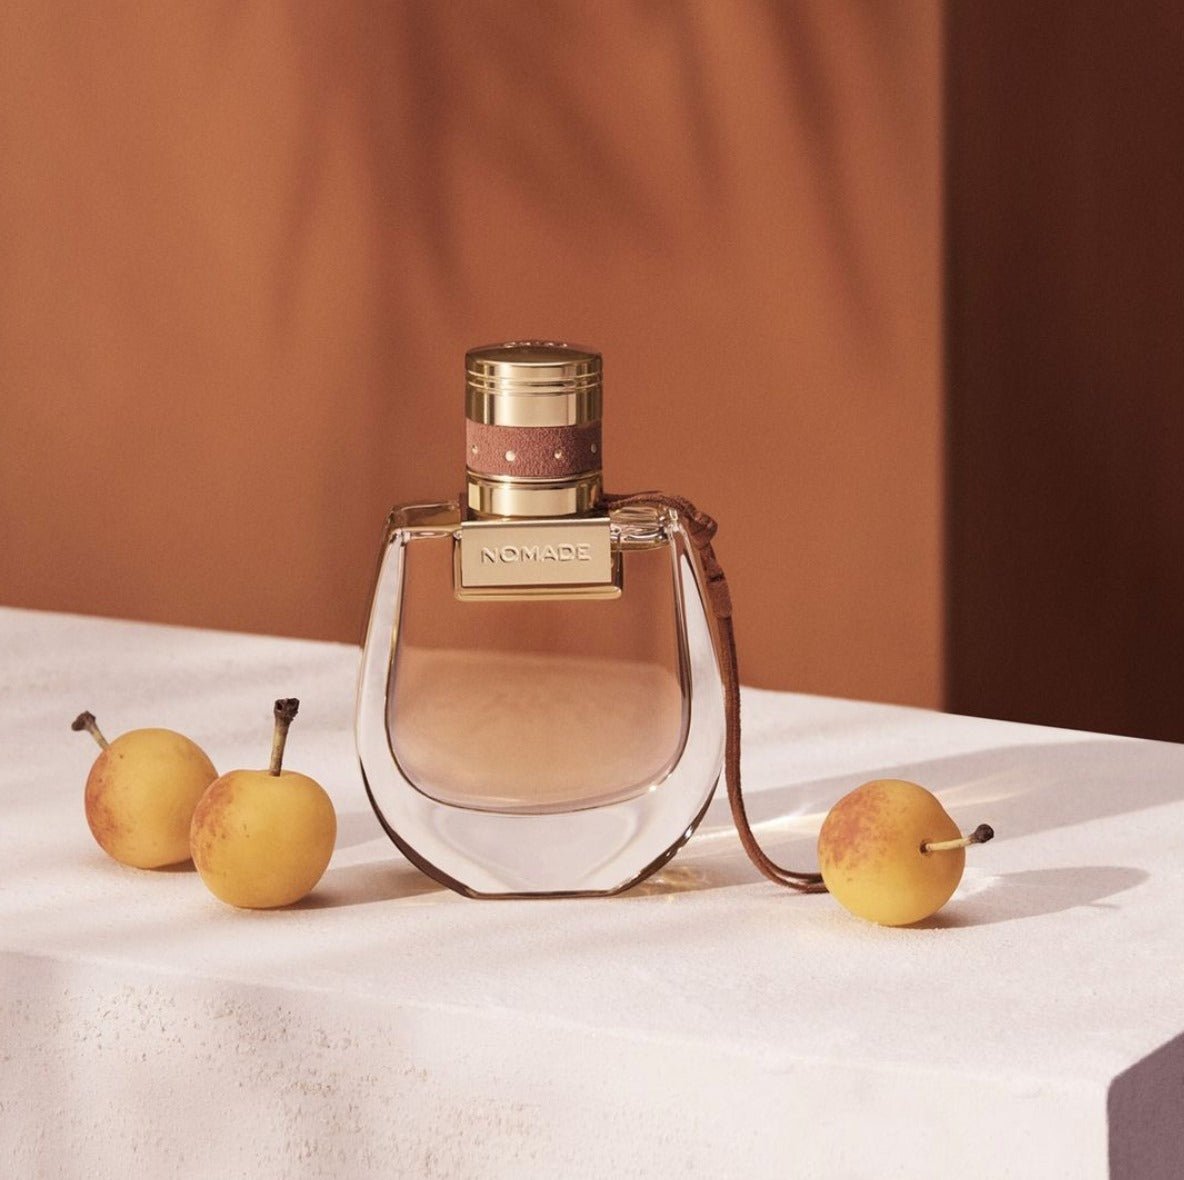 Chloé Nomade Absolu de Parfum | My Perfume Shop Australia